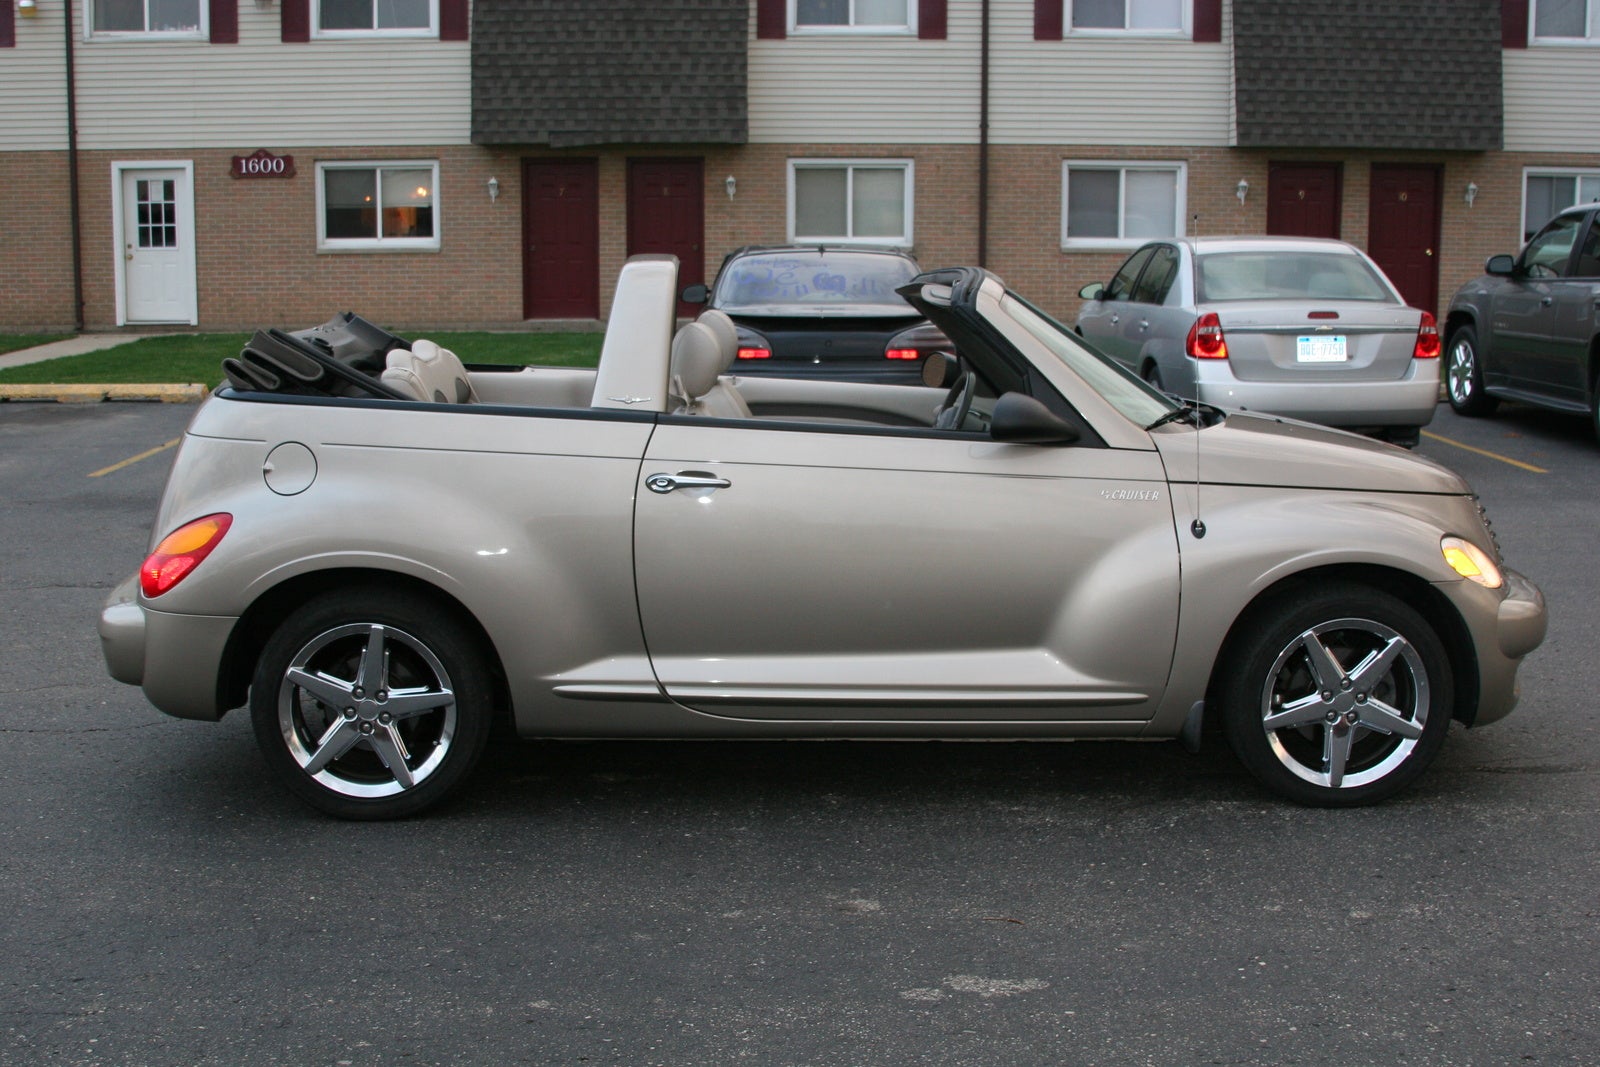 2008 Chrysler pt cruiser limited edition turbo #5